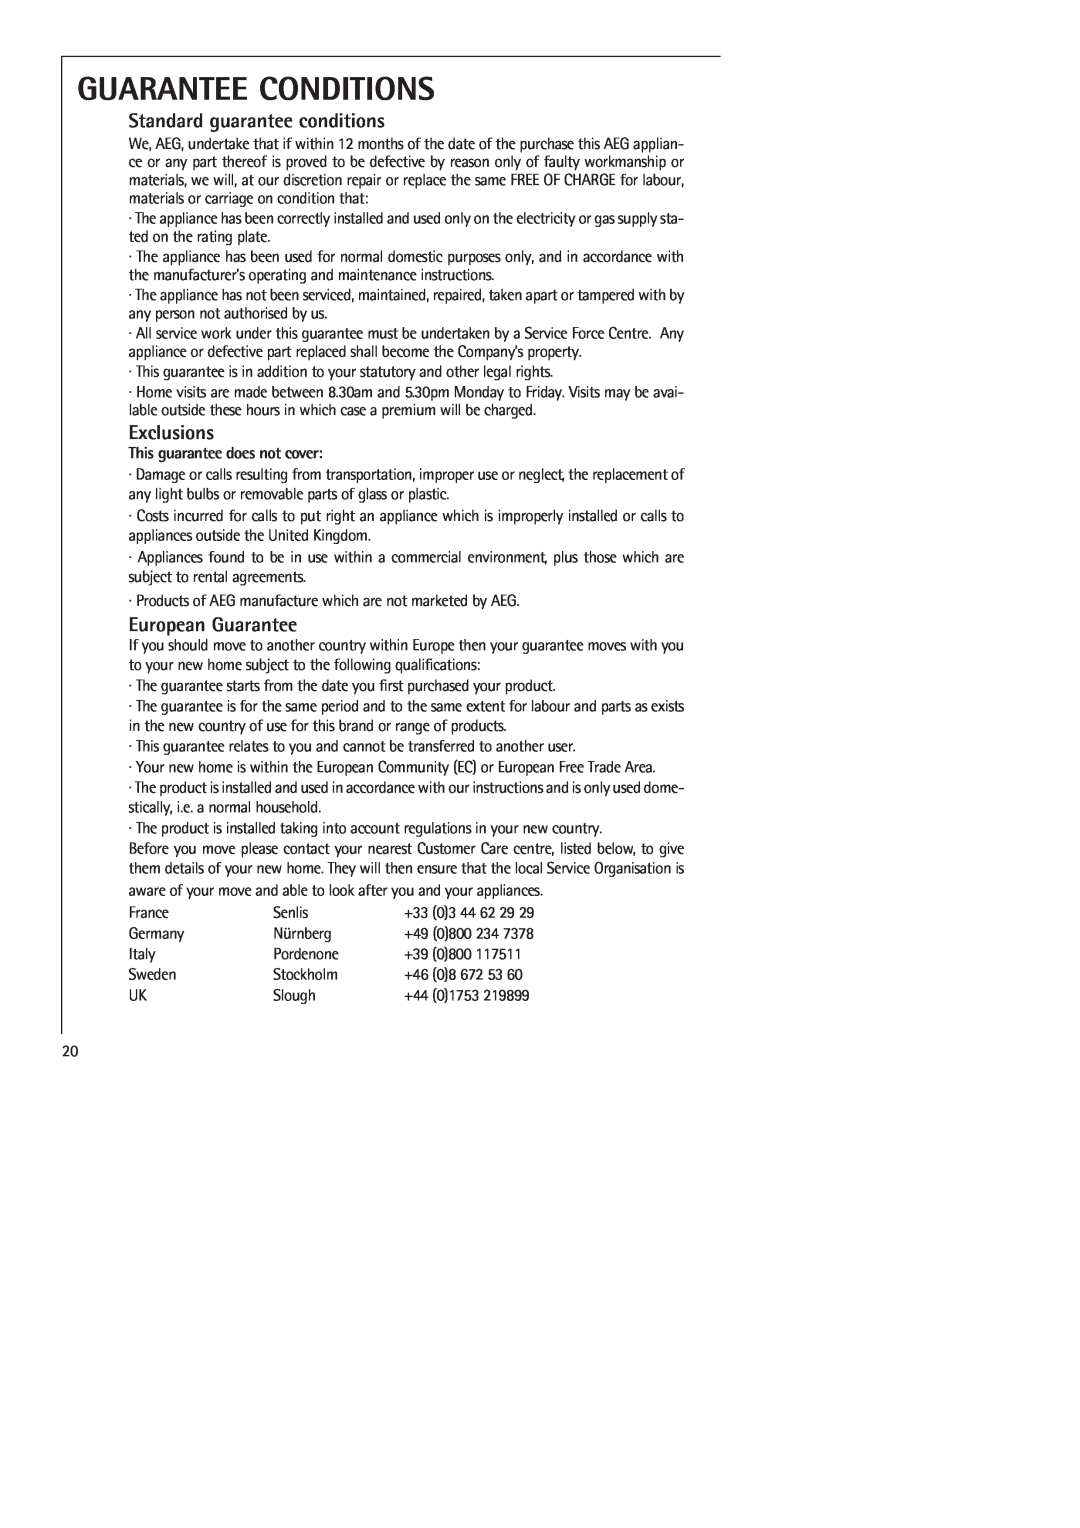 Electrolux SANTO 70398-DT manual Guarantee Conditions, Standard guarantee conditions, Exclusions, European Guarantee 